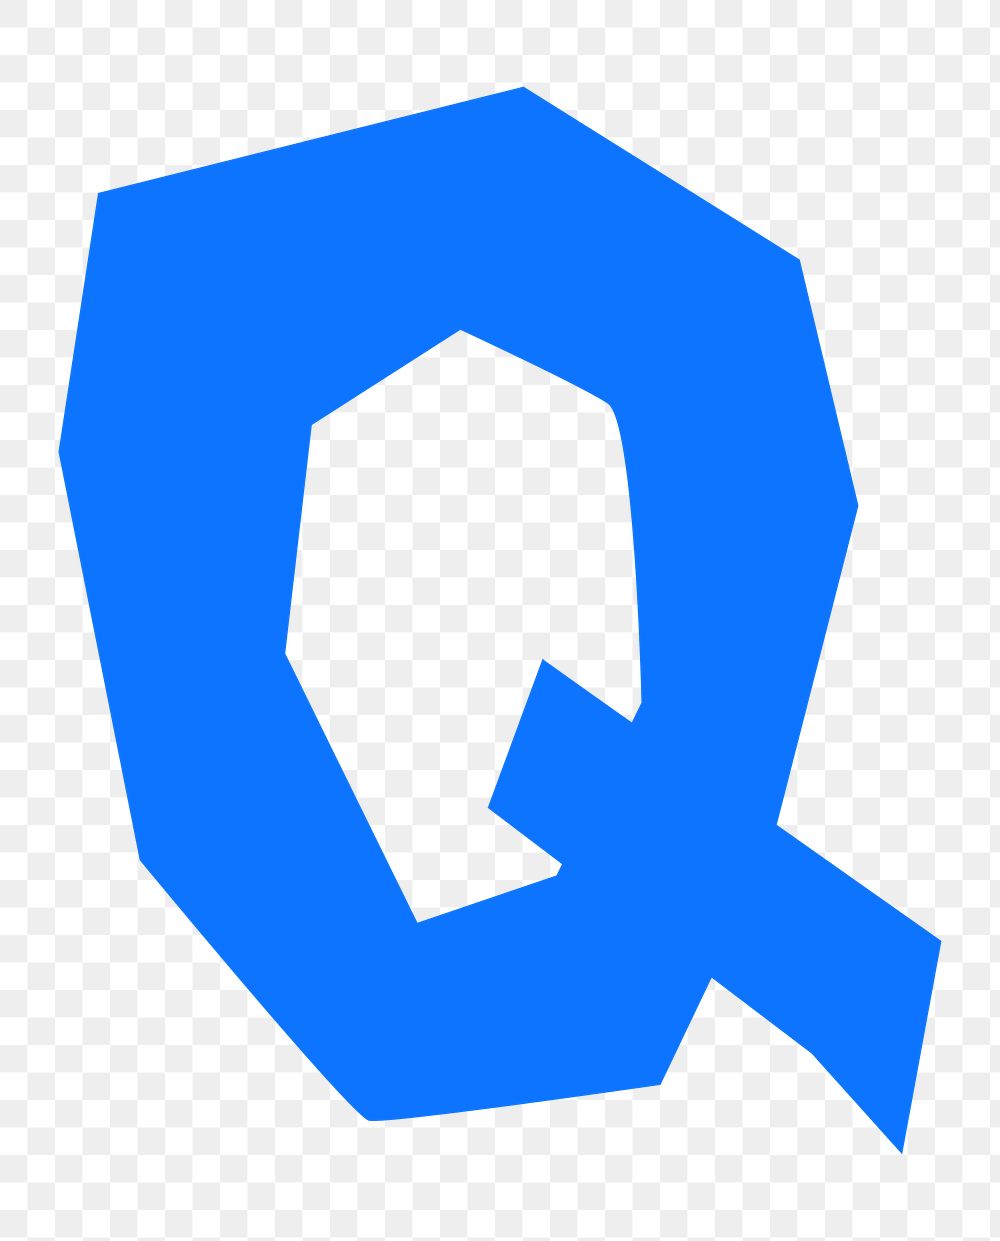 Letter Q png in blue paper cut shape font, transparent background